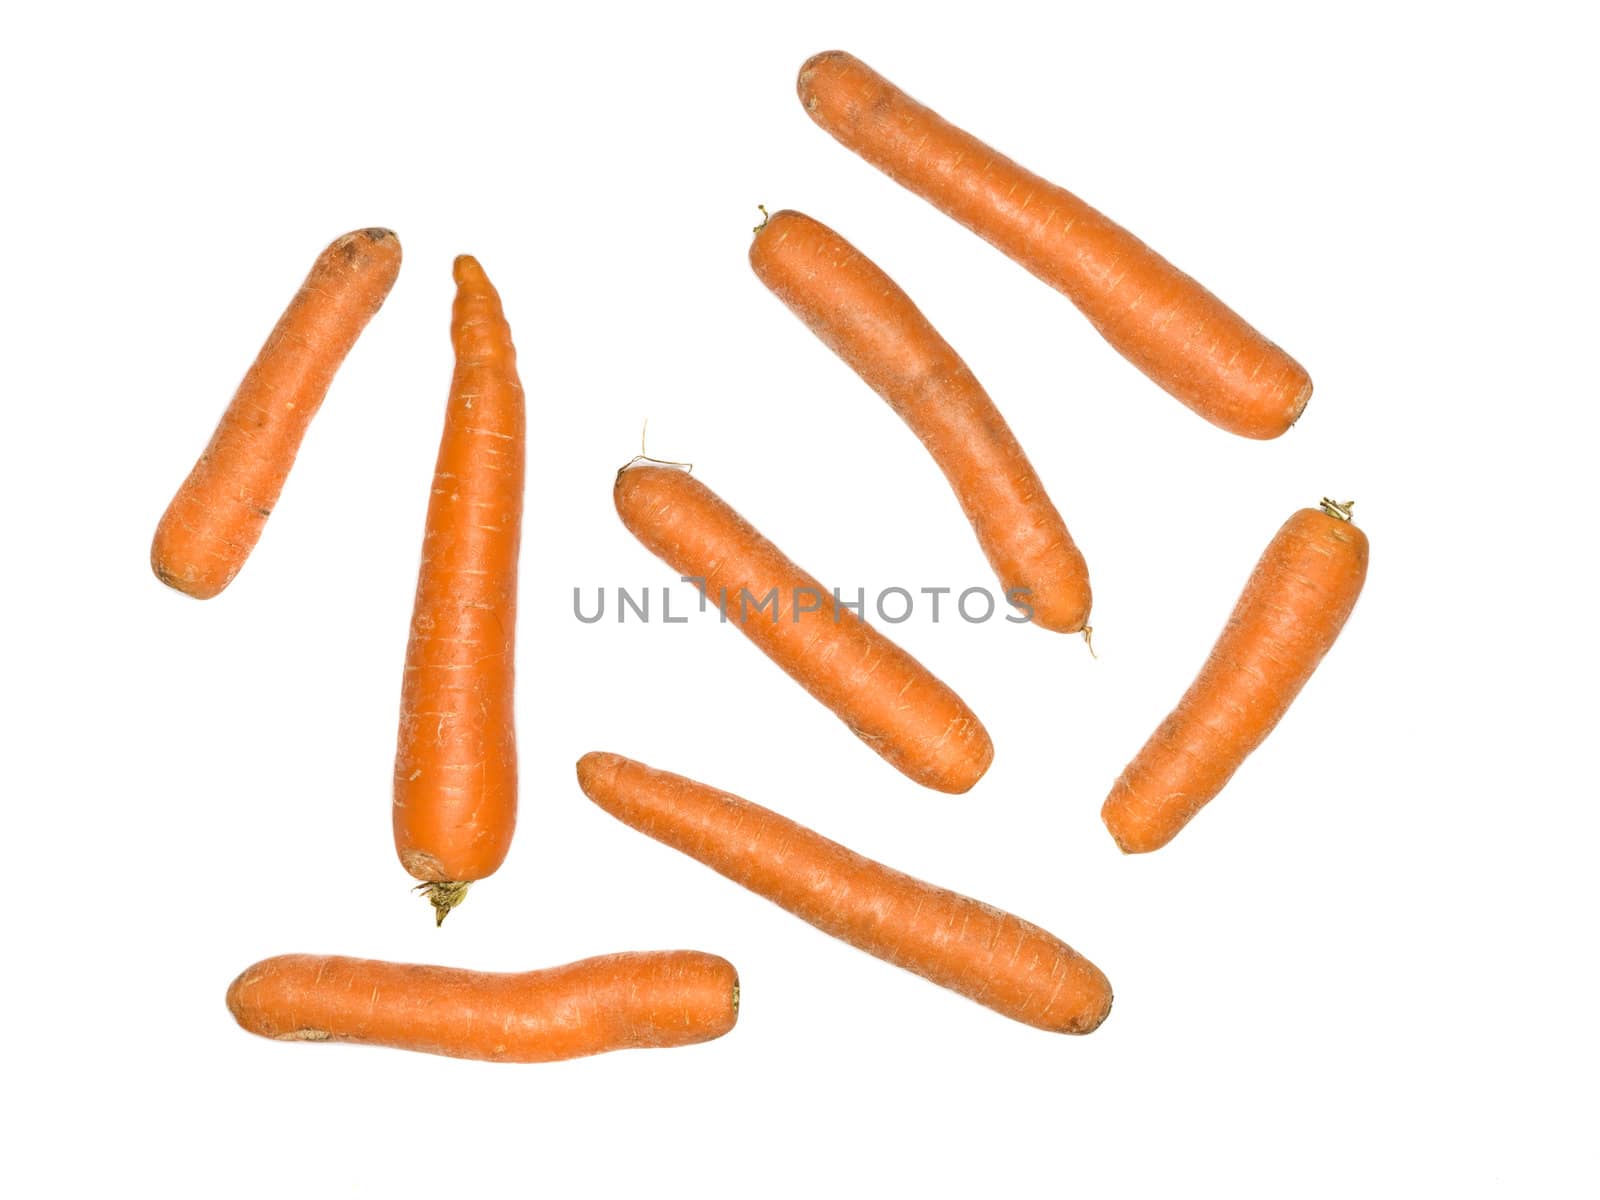 Multiple carrots by gemenacom